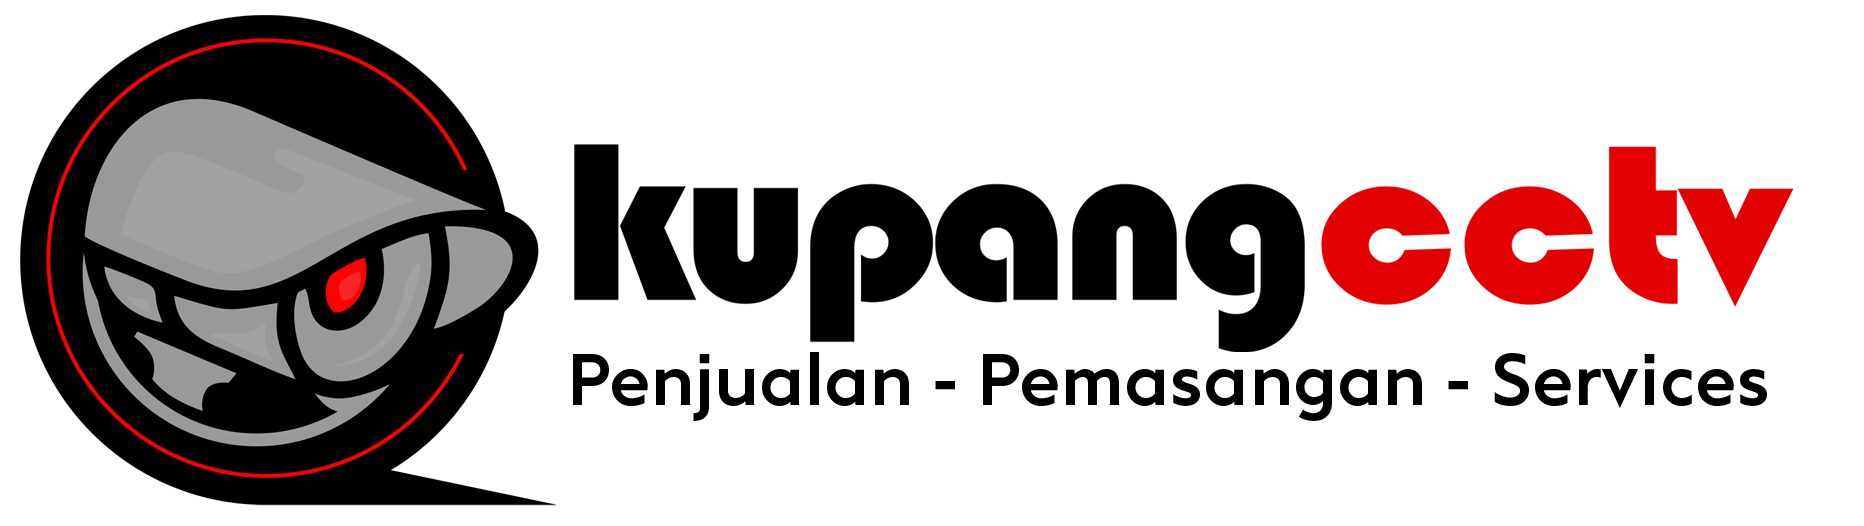 logo-kupang-cctv-2021.png